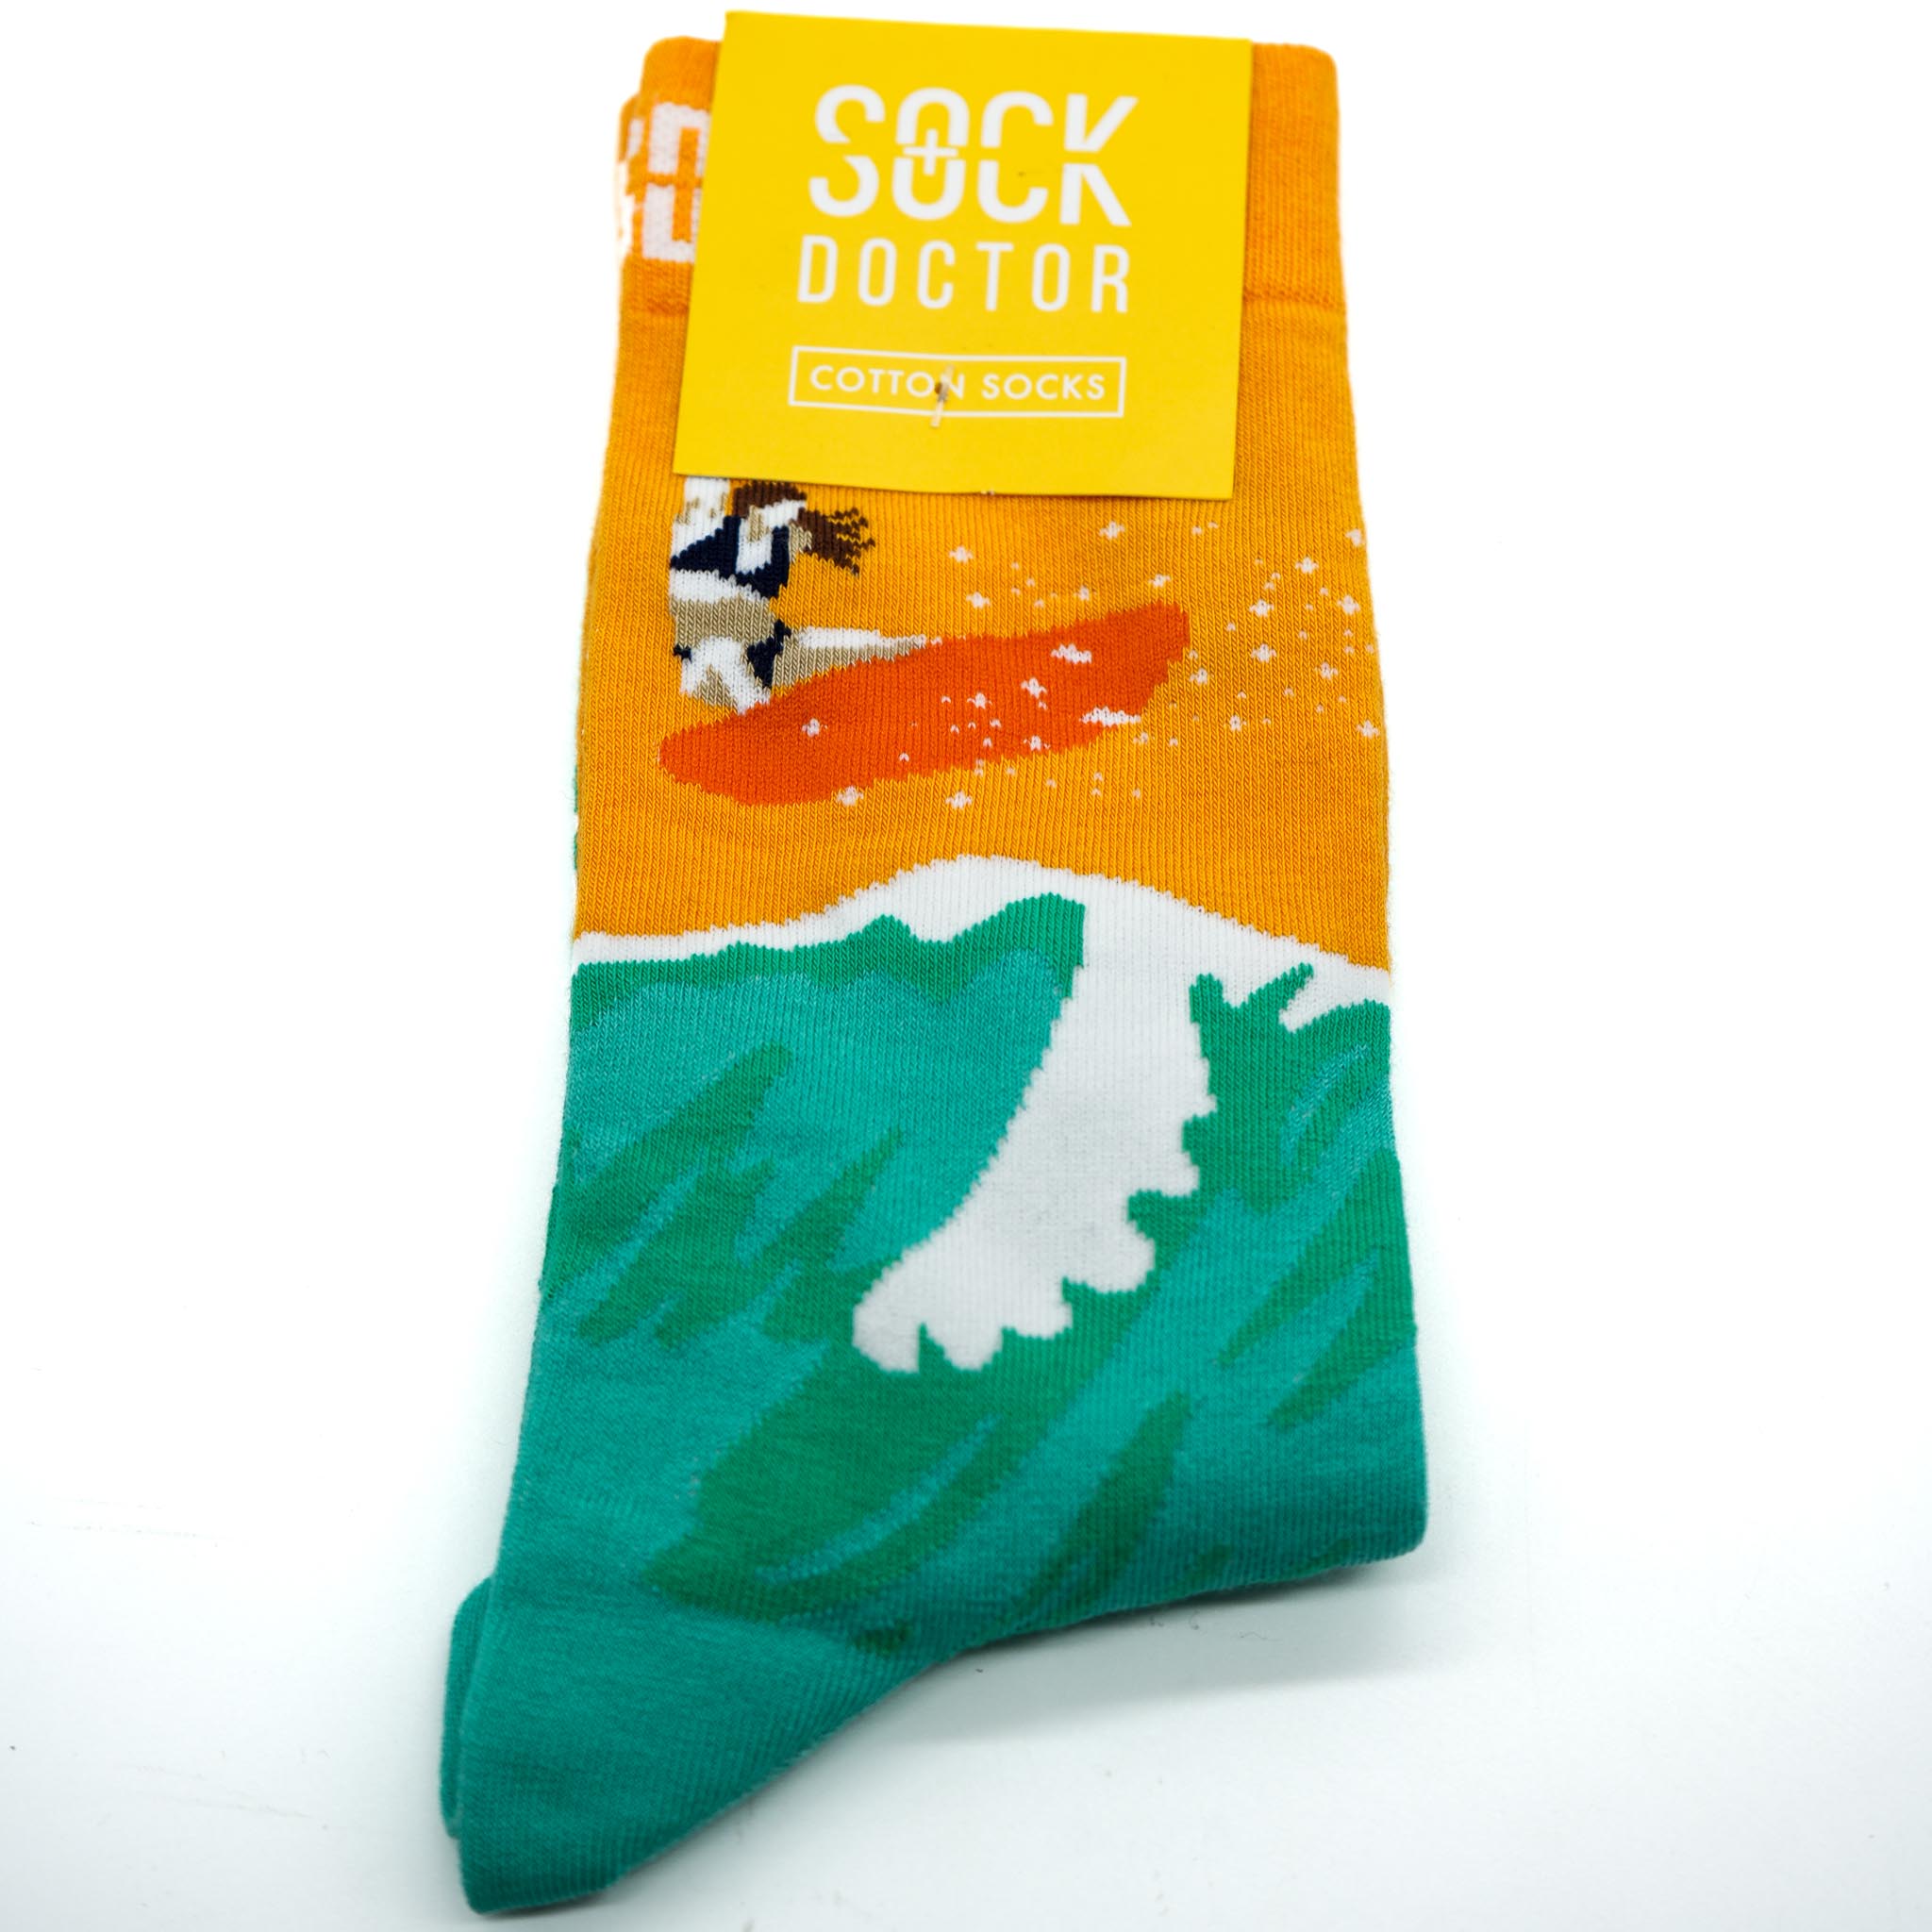 kowabunga surfer socks cape town sock doctor